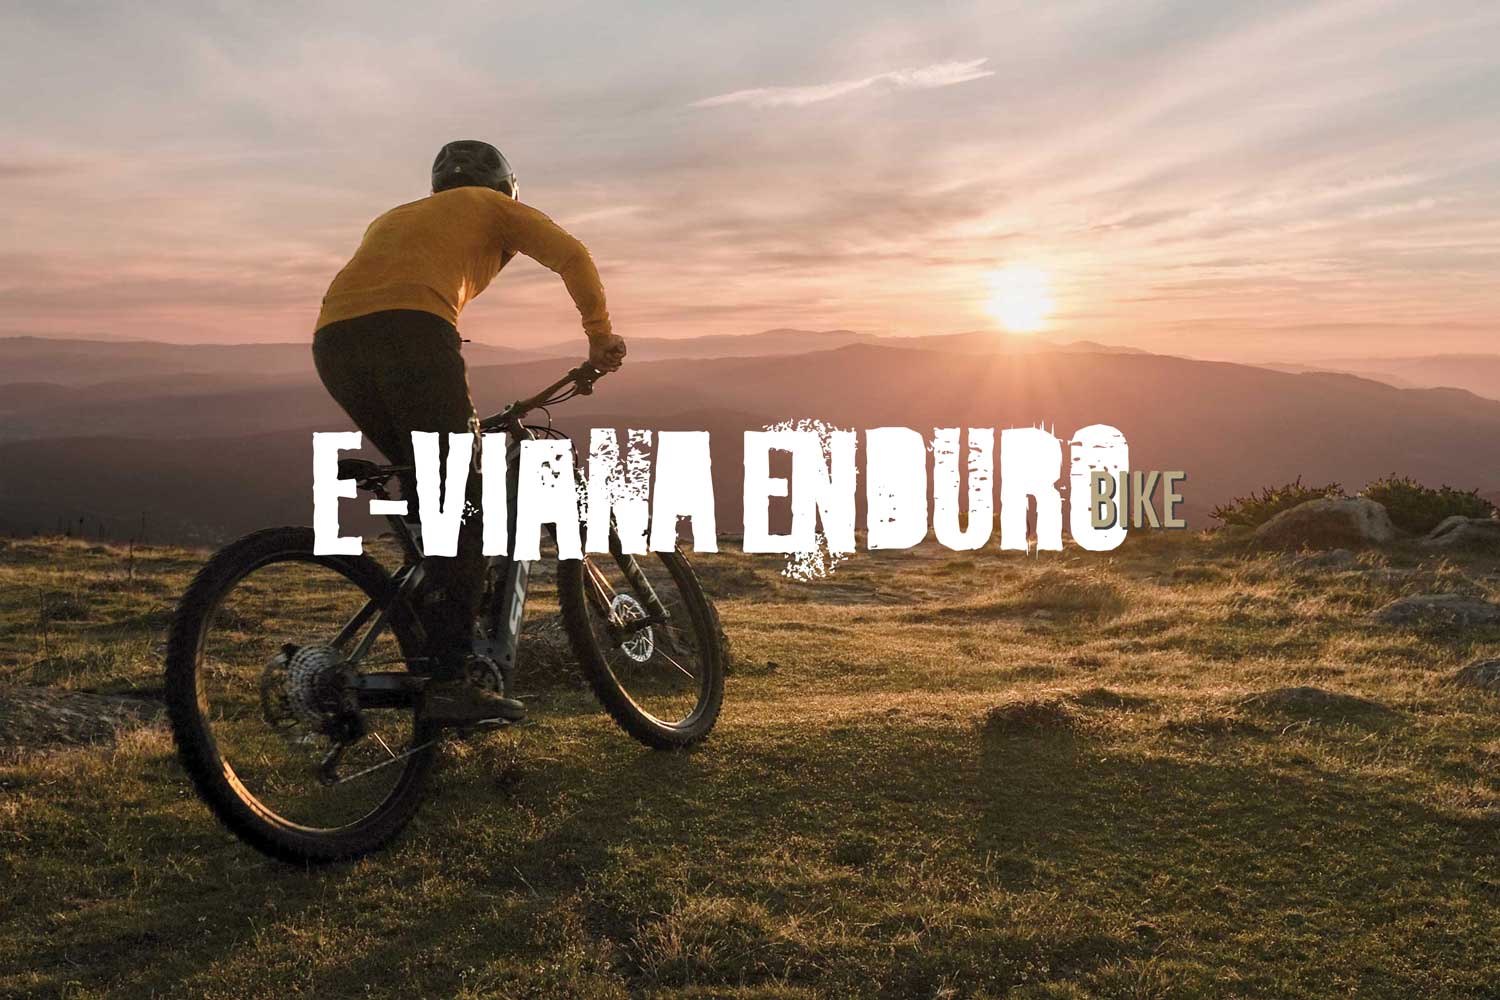 Viana Enduro eBike